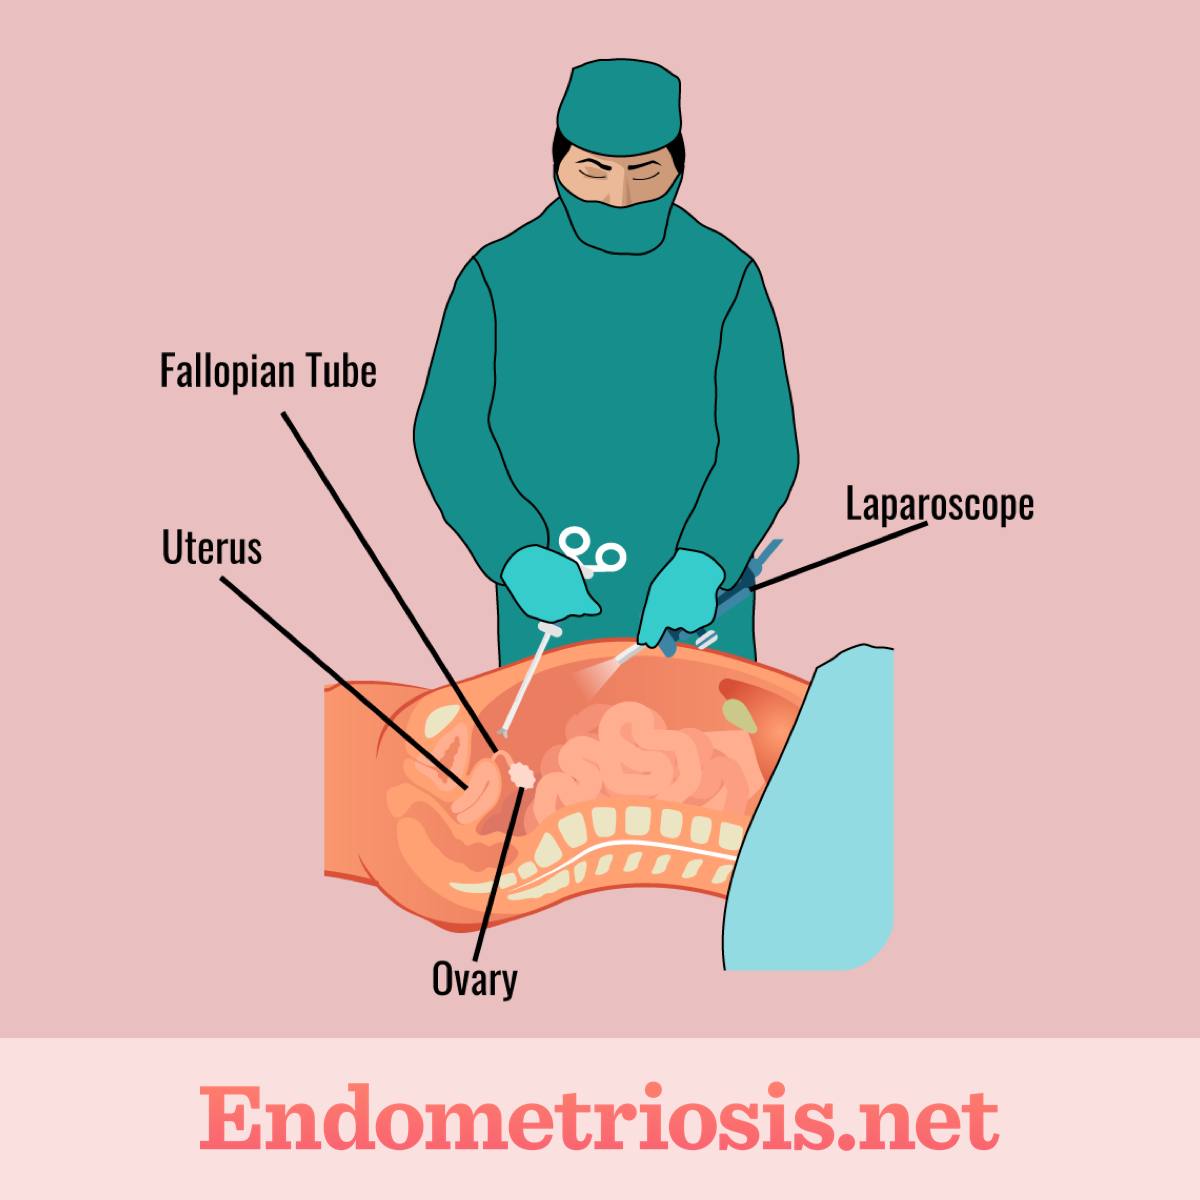 Surgeon performing laparoscopy through incision in abdomen to remove endometriosis from reproductive organs.